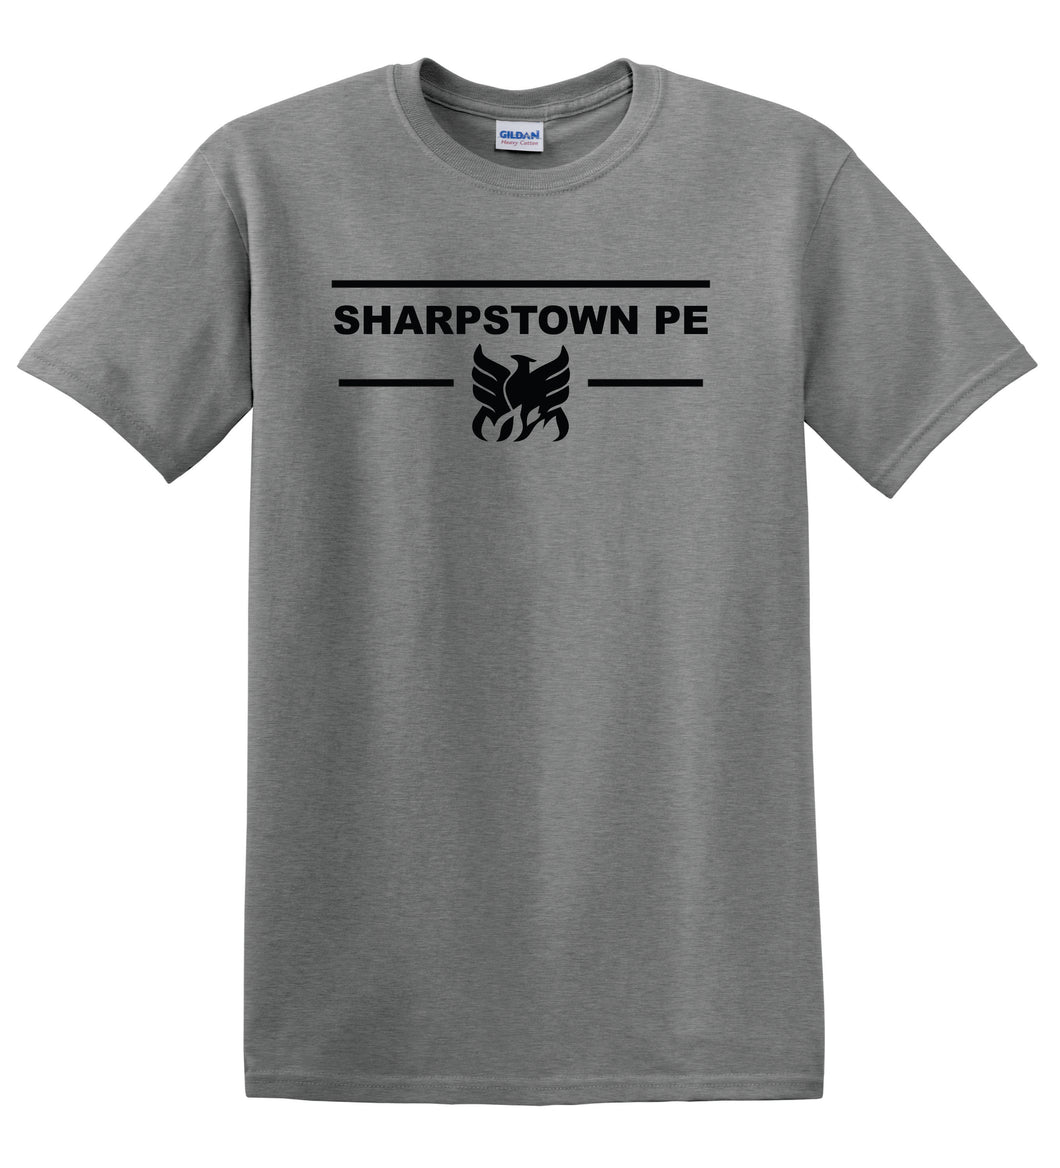 KIPP Sharpstown College Prep P.E. Shirt